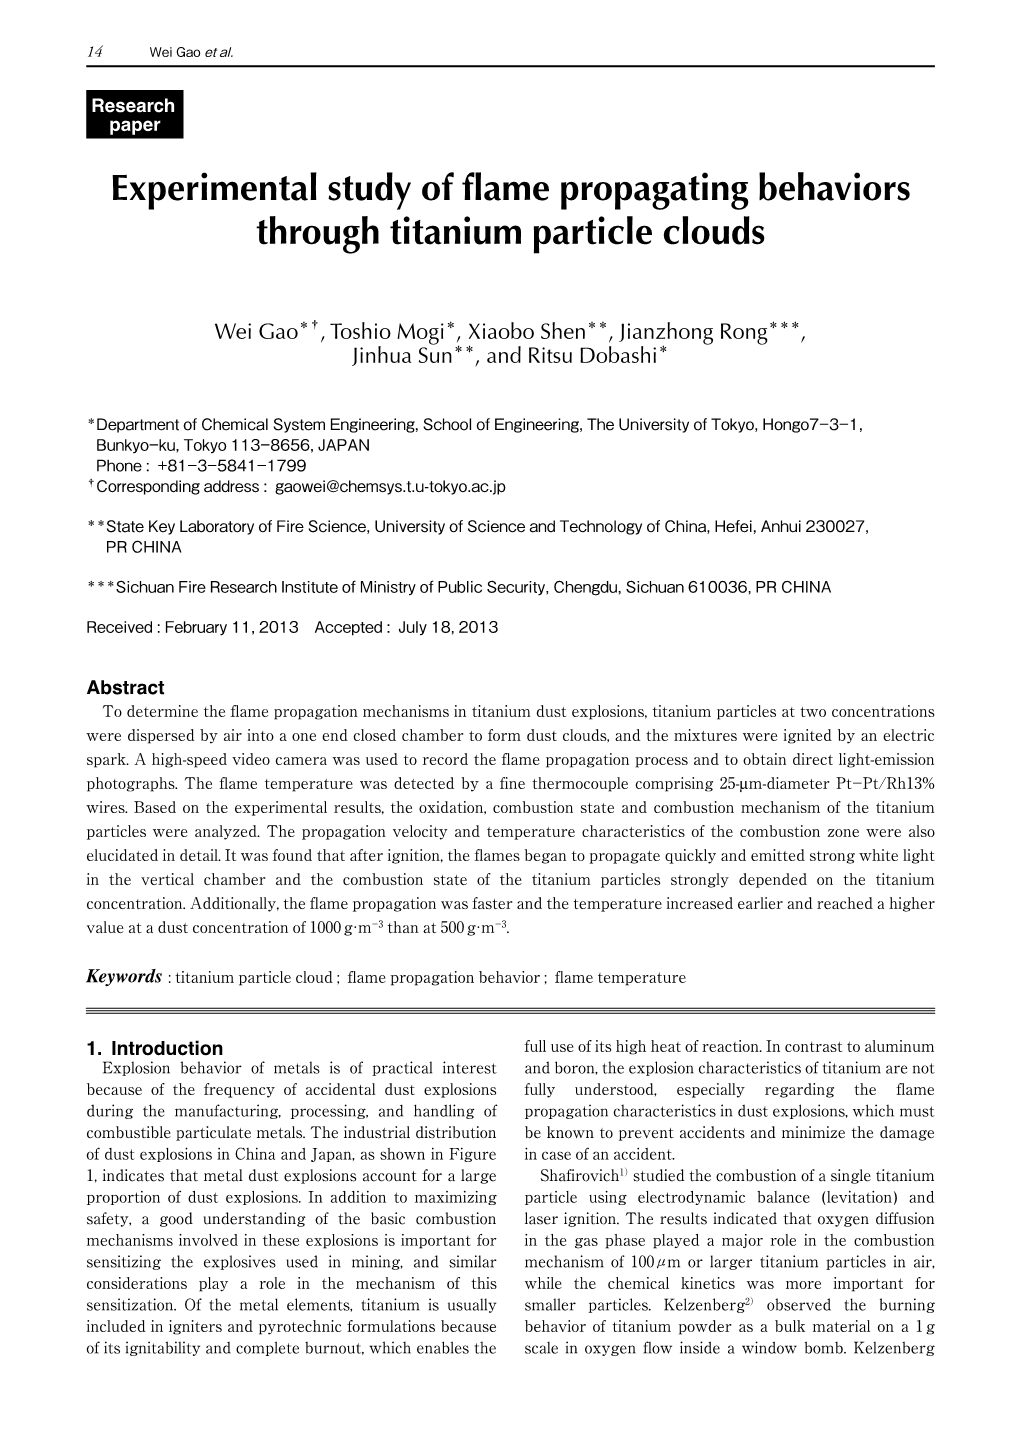 Experimental Study of Flame Propagating Behaviors Through Titanium Particle Clouds